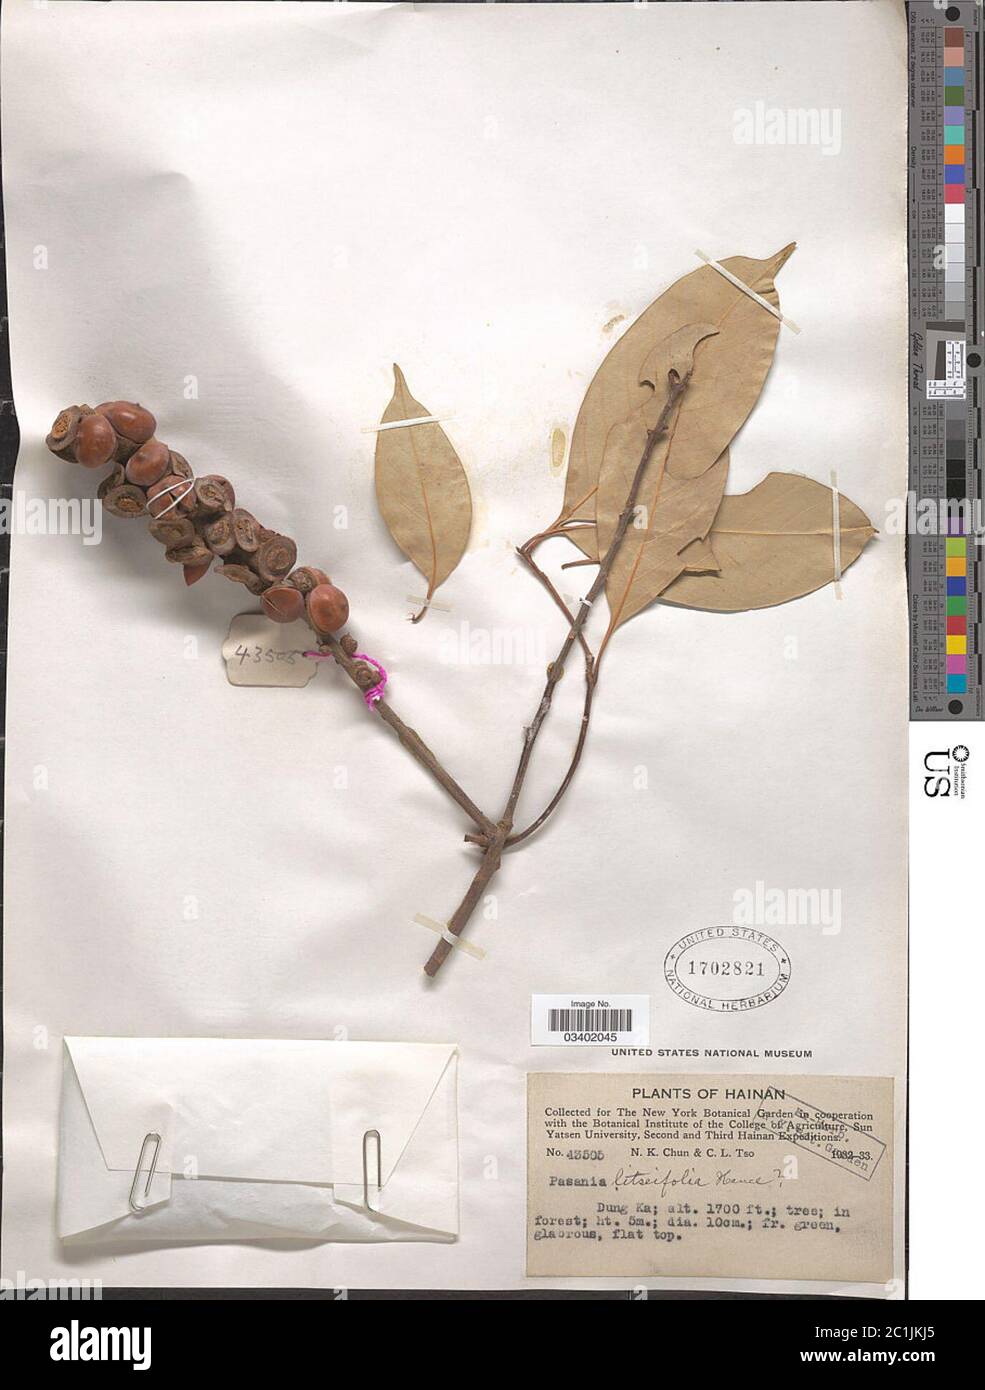 Lithocarpus litseifolius Hance Chun Lithocarpus litseifolius Hance Chun. Stock Photo